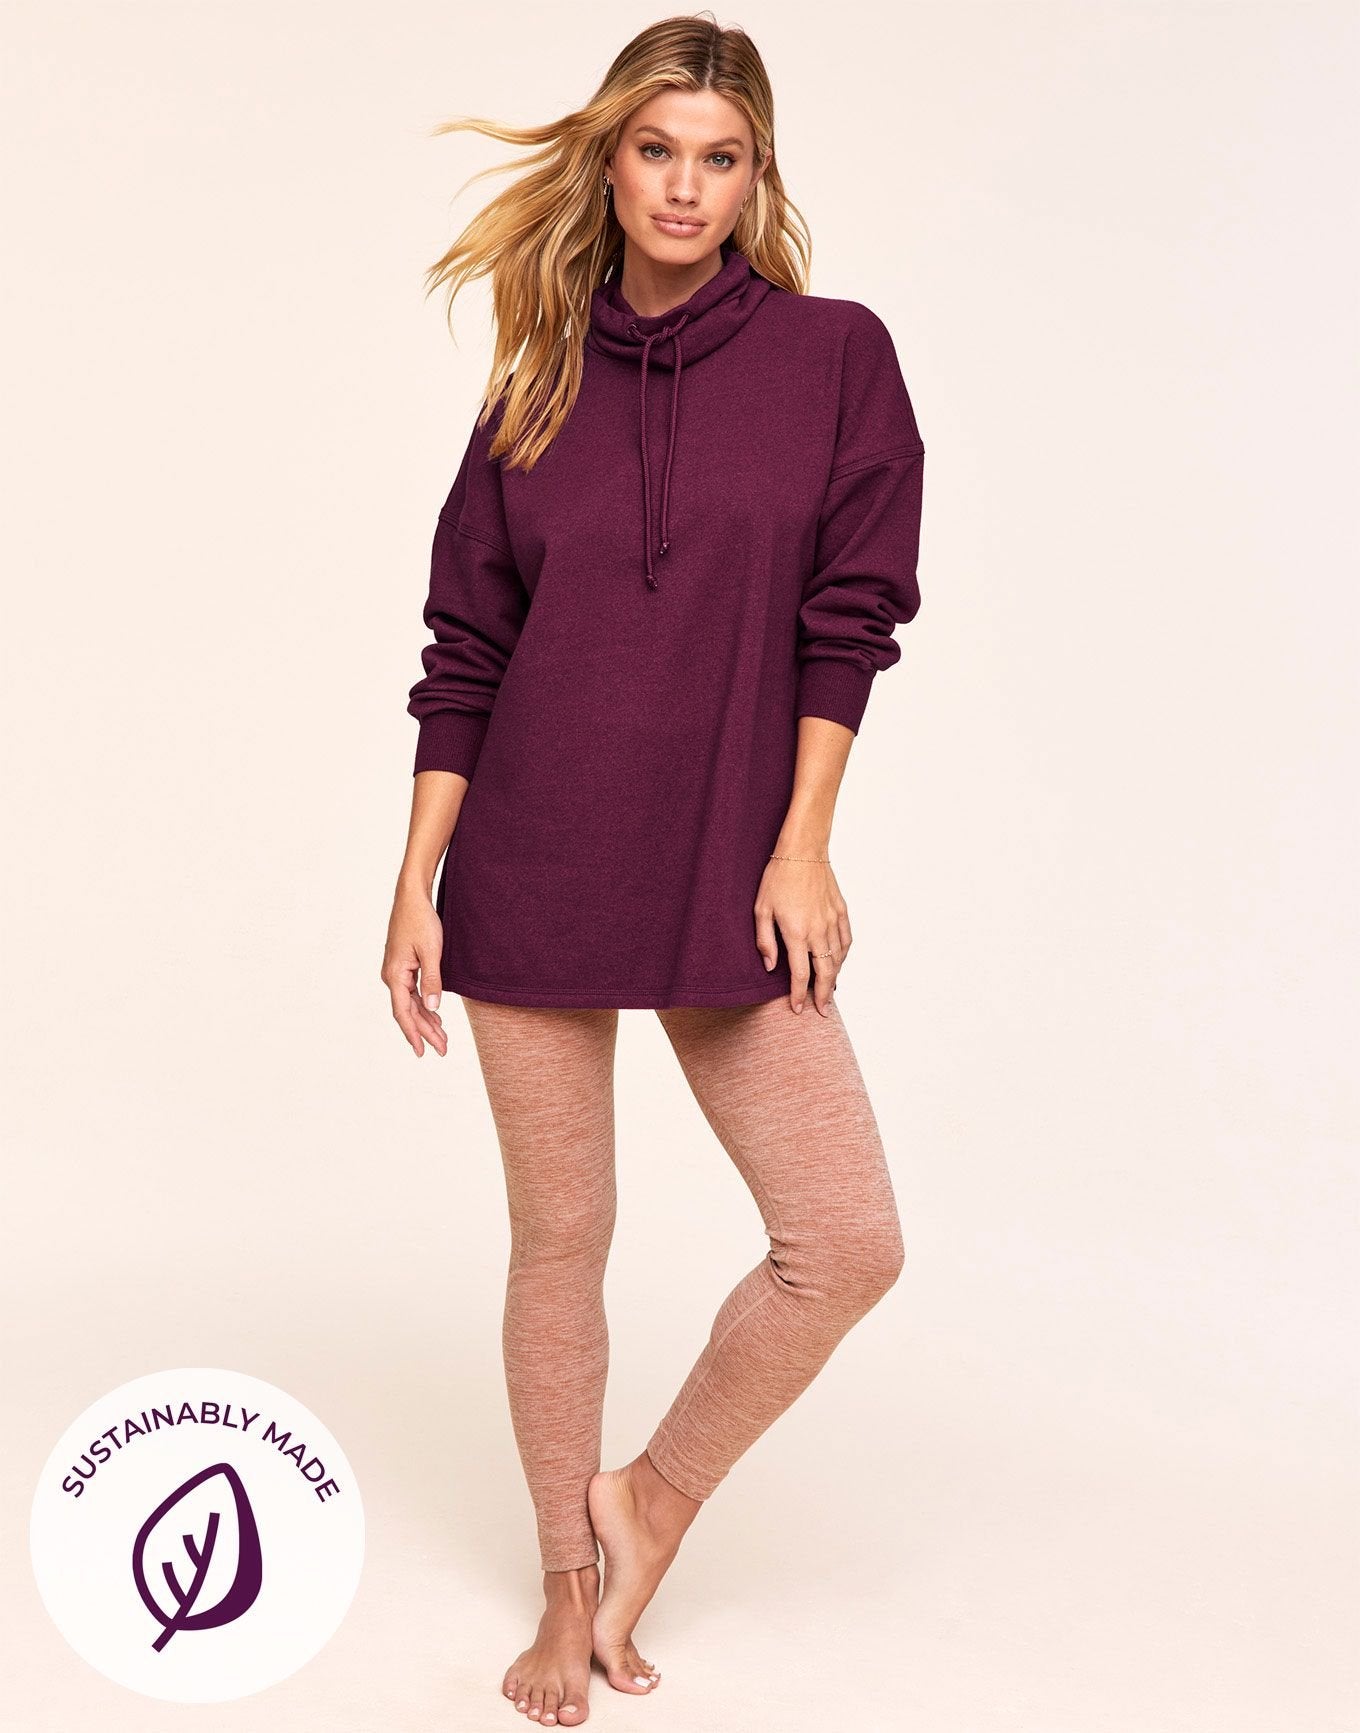 Adore Me Cate Sweatshirt in color Cyclo 501 Purple and shape sweatshirt